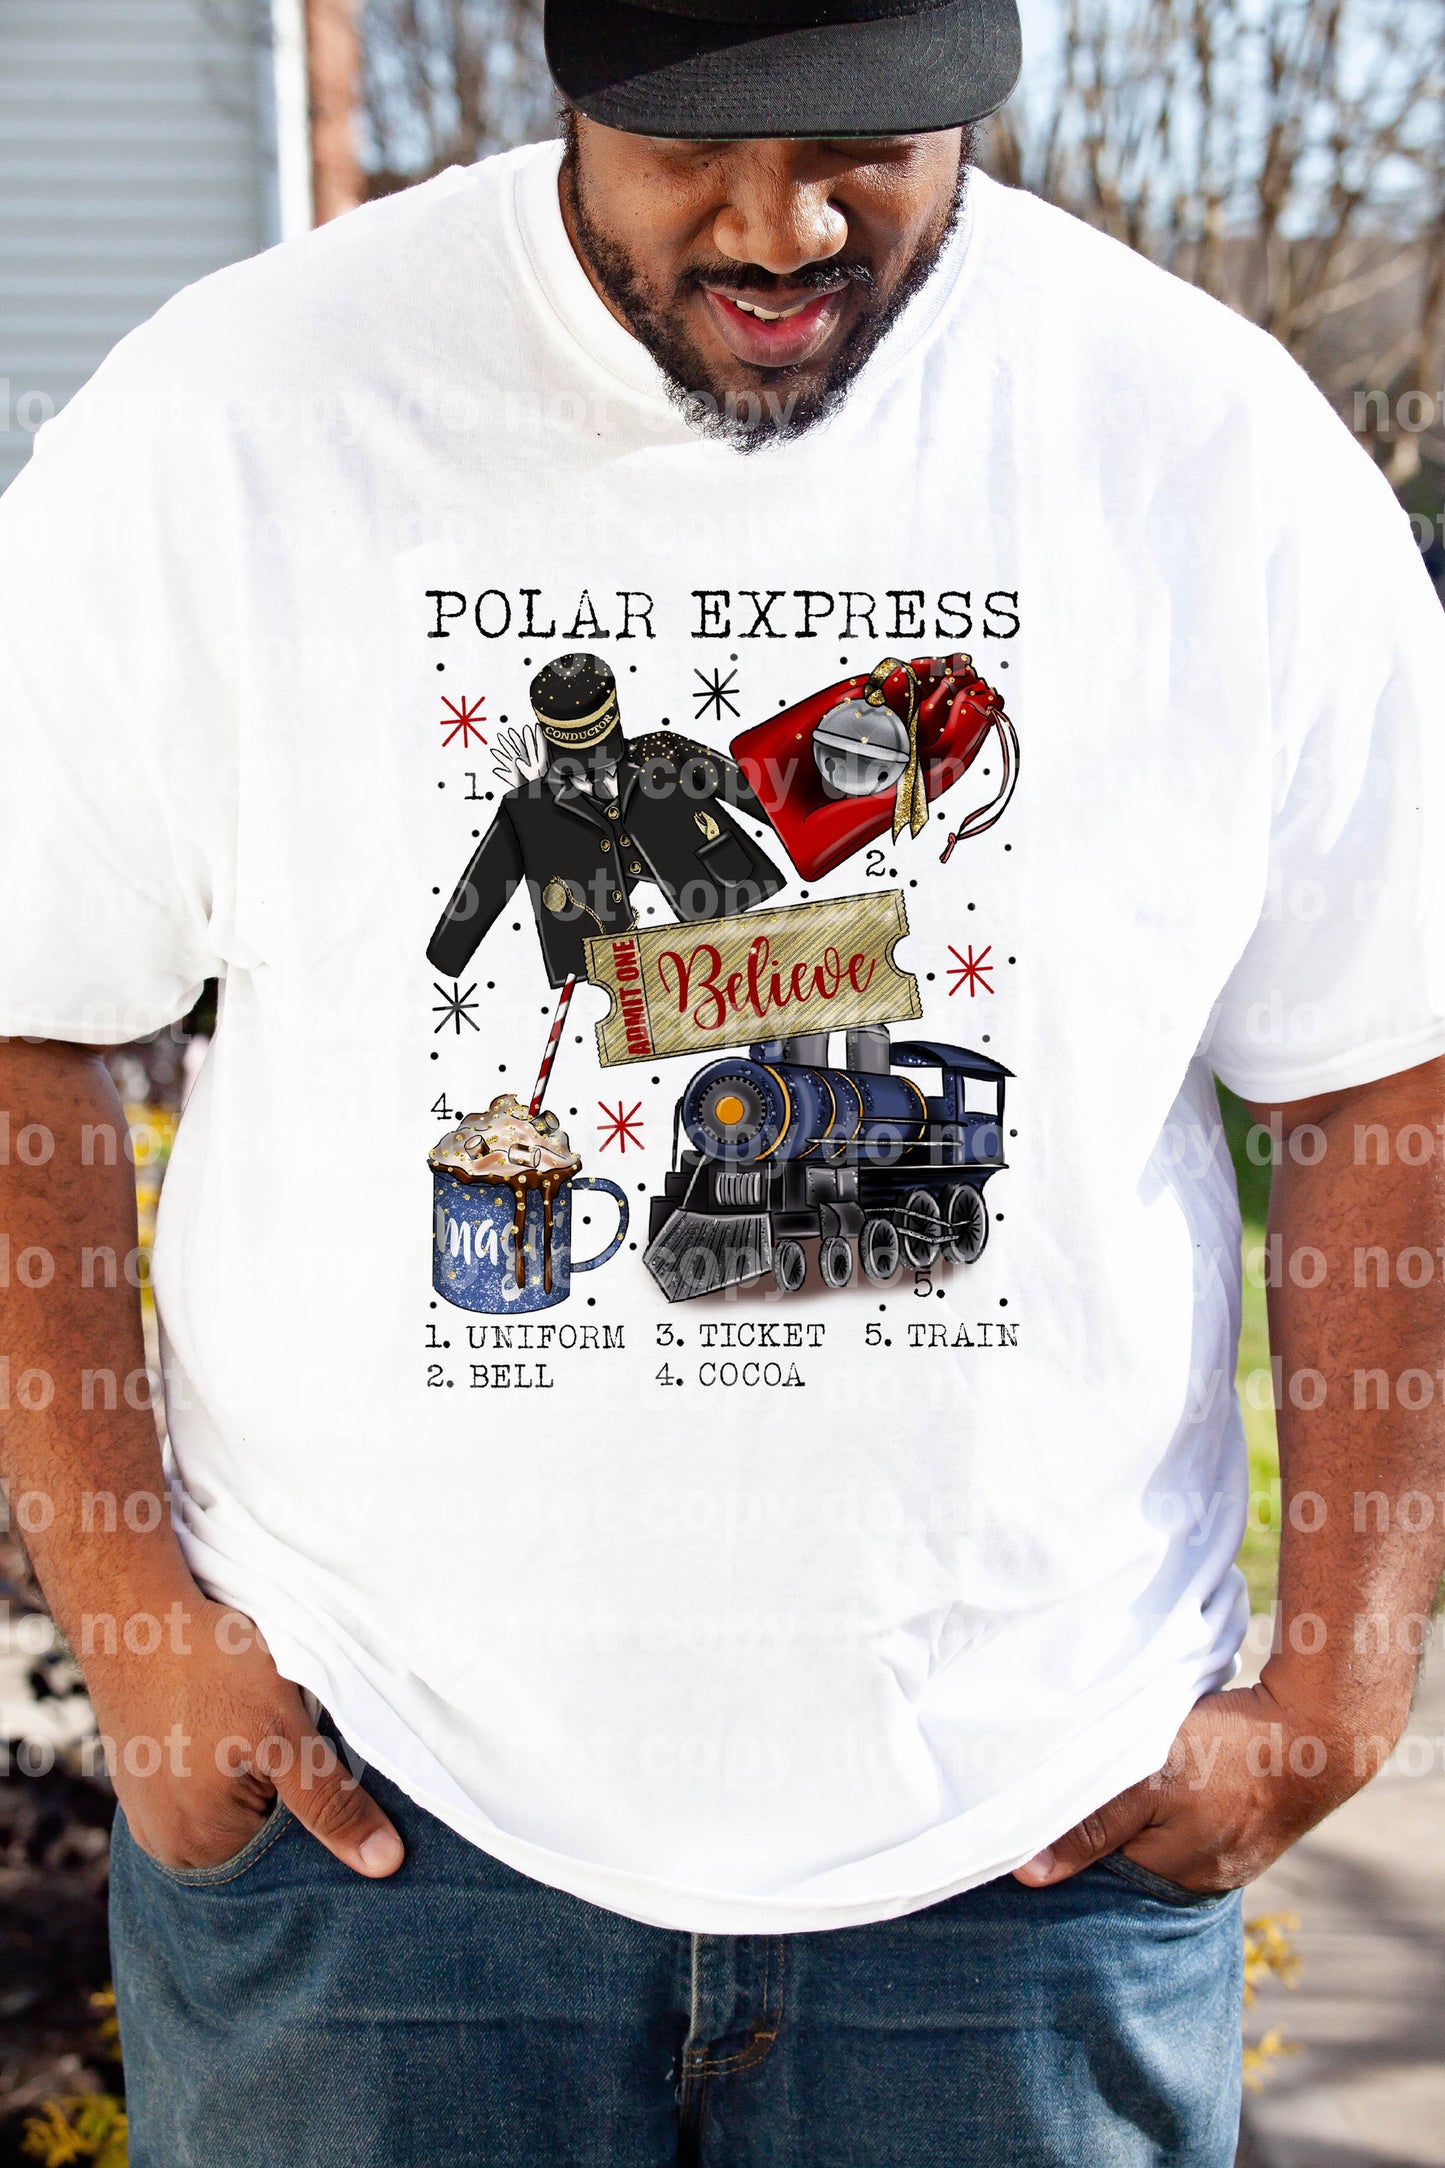 Polar Express Dream Print or Sublimation Print